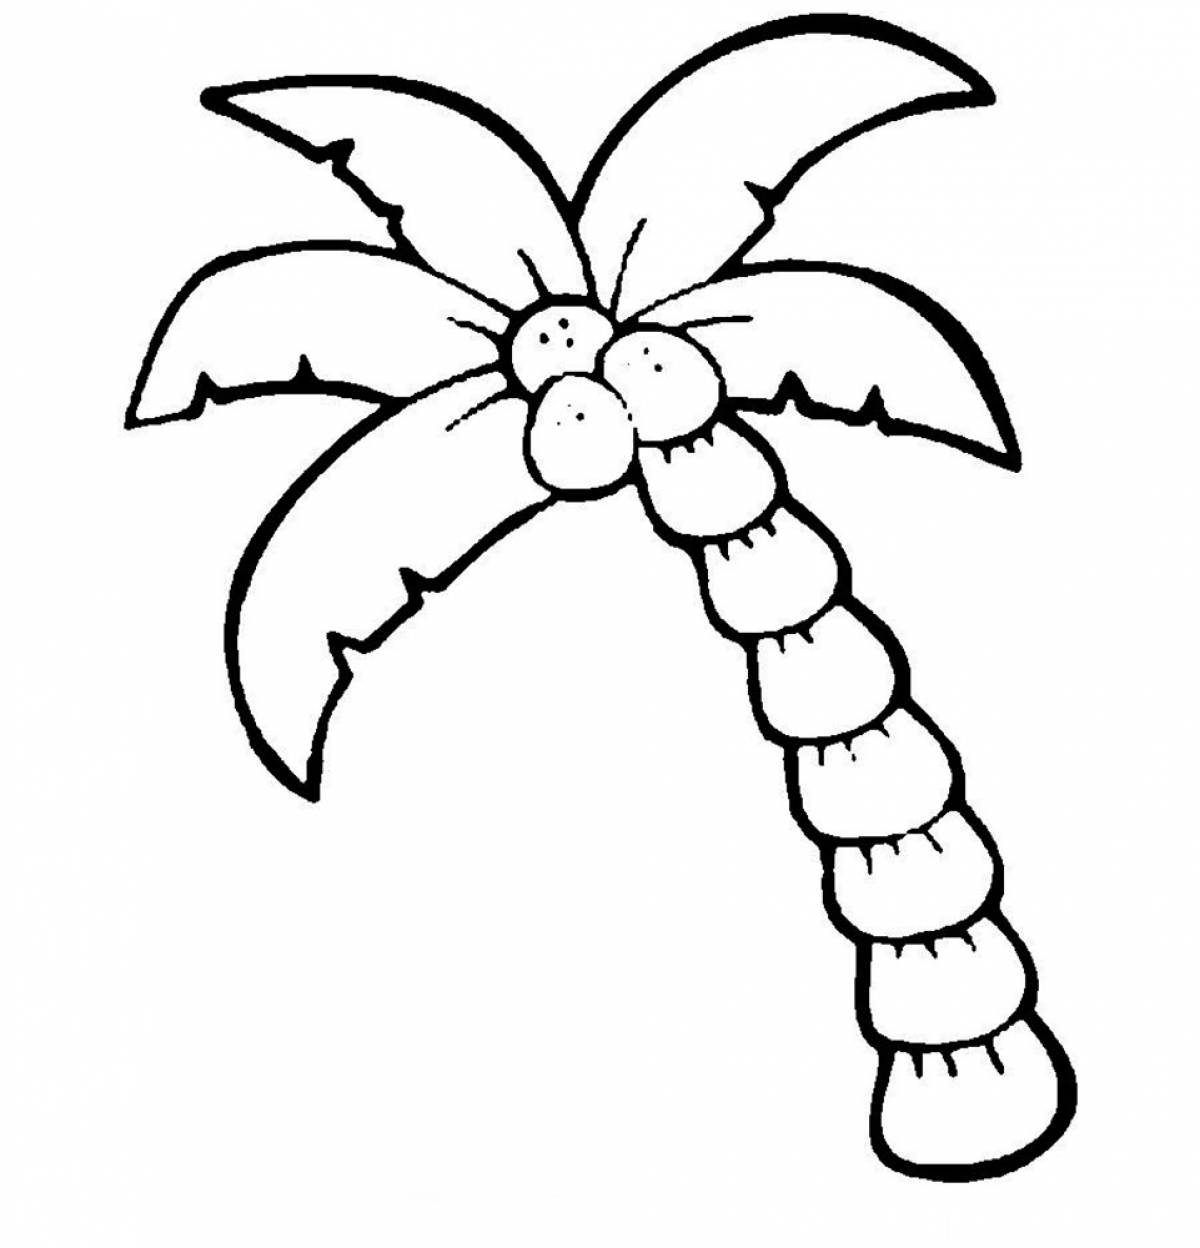 Palm tree drawing